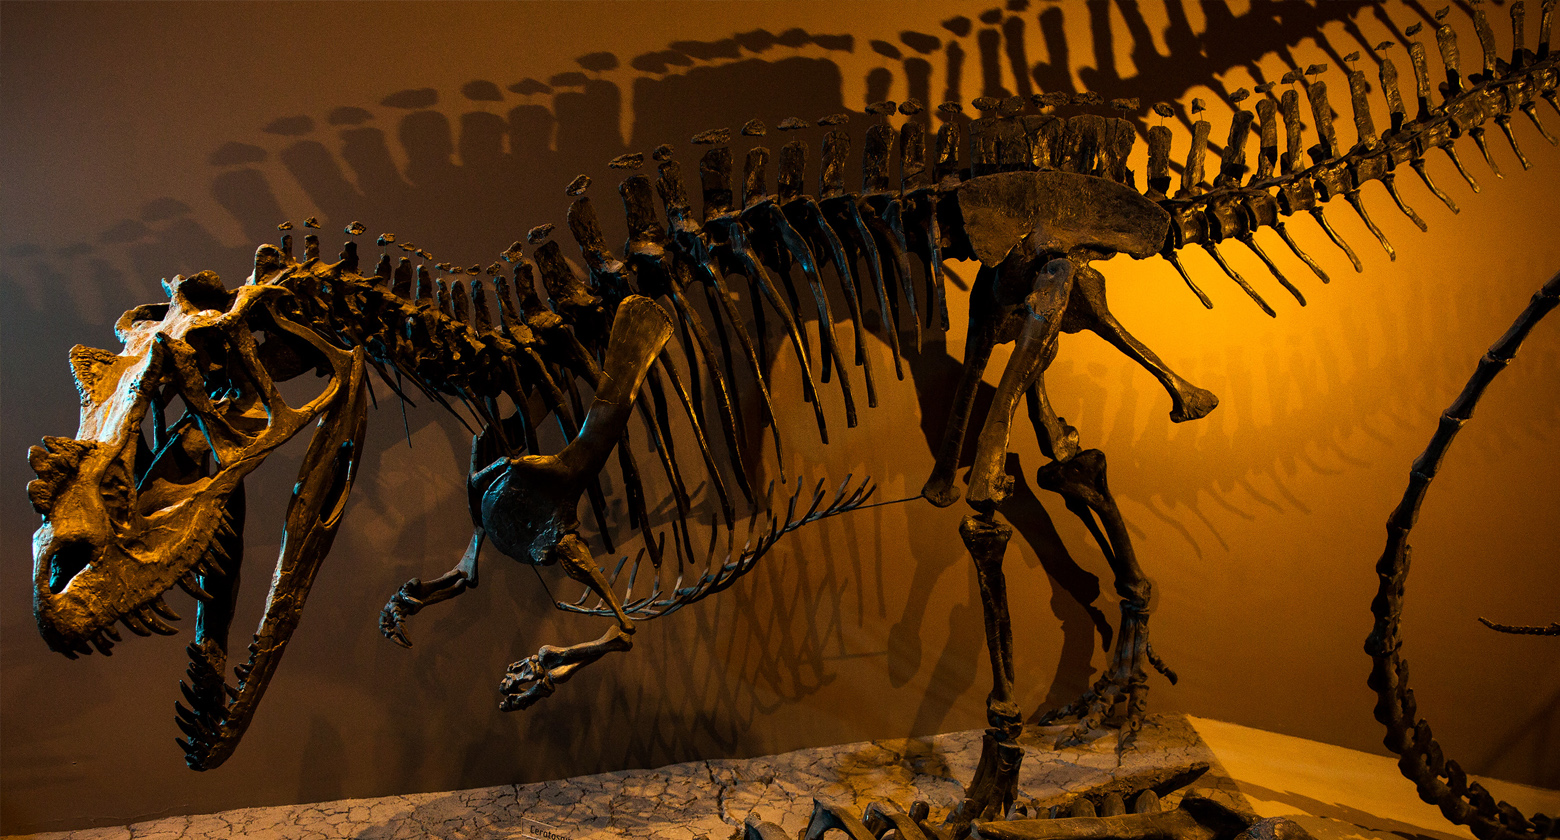 [image] Ceratosaurus - An Ornate Jurassic Chomper